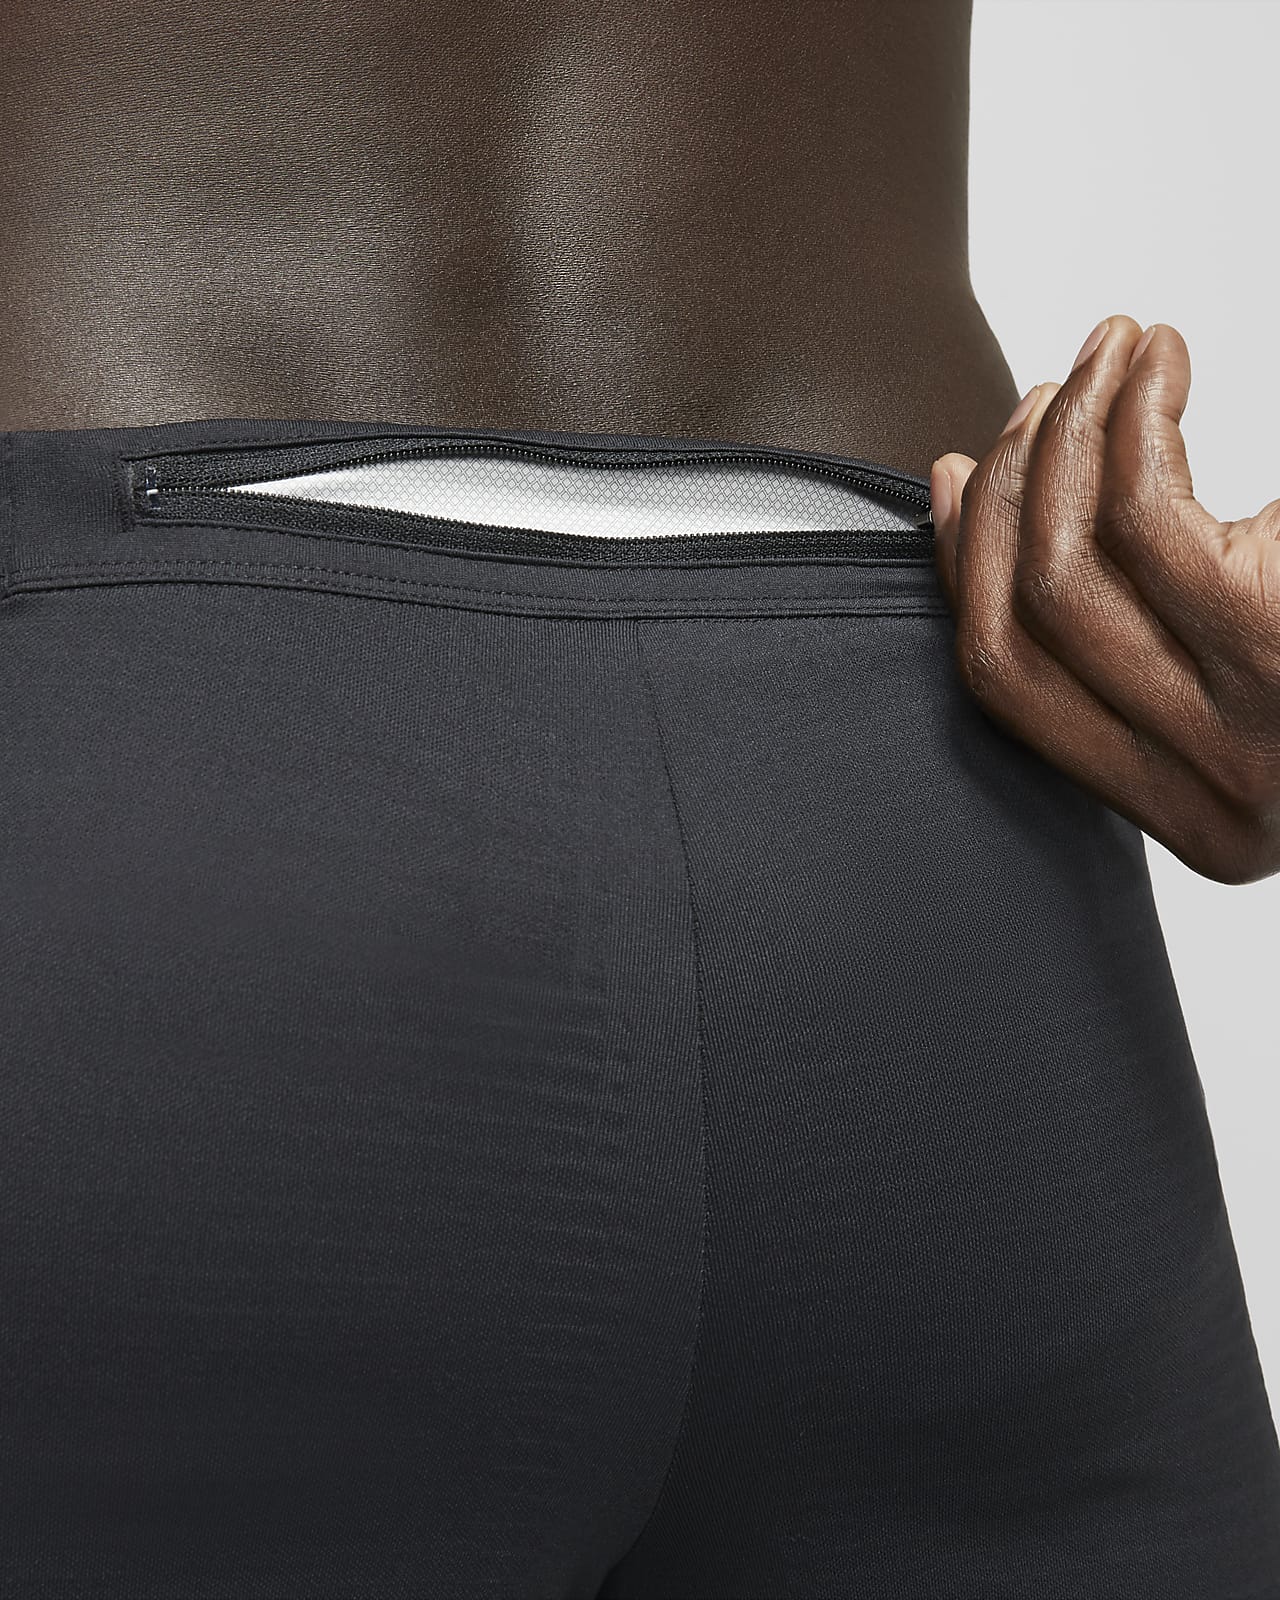 Nike Men Phenom Elite Running Tights (Medium, Black) : .com